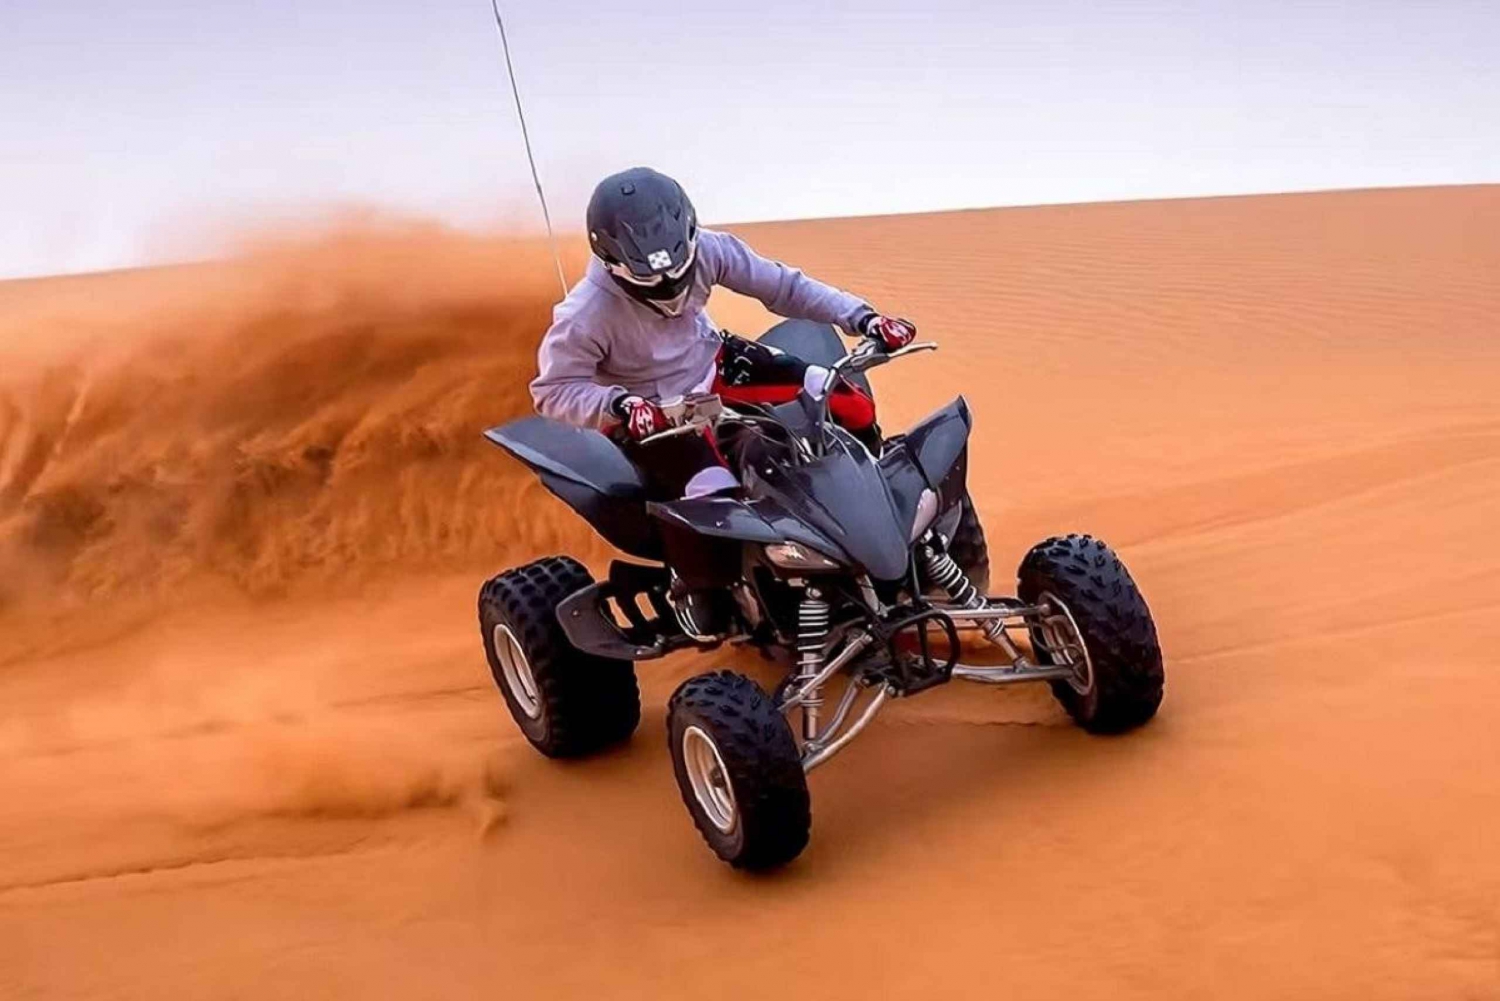 Dubai: Opplev 60 minutter med firhjuling og grillmiddag